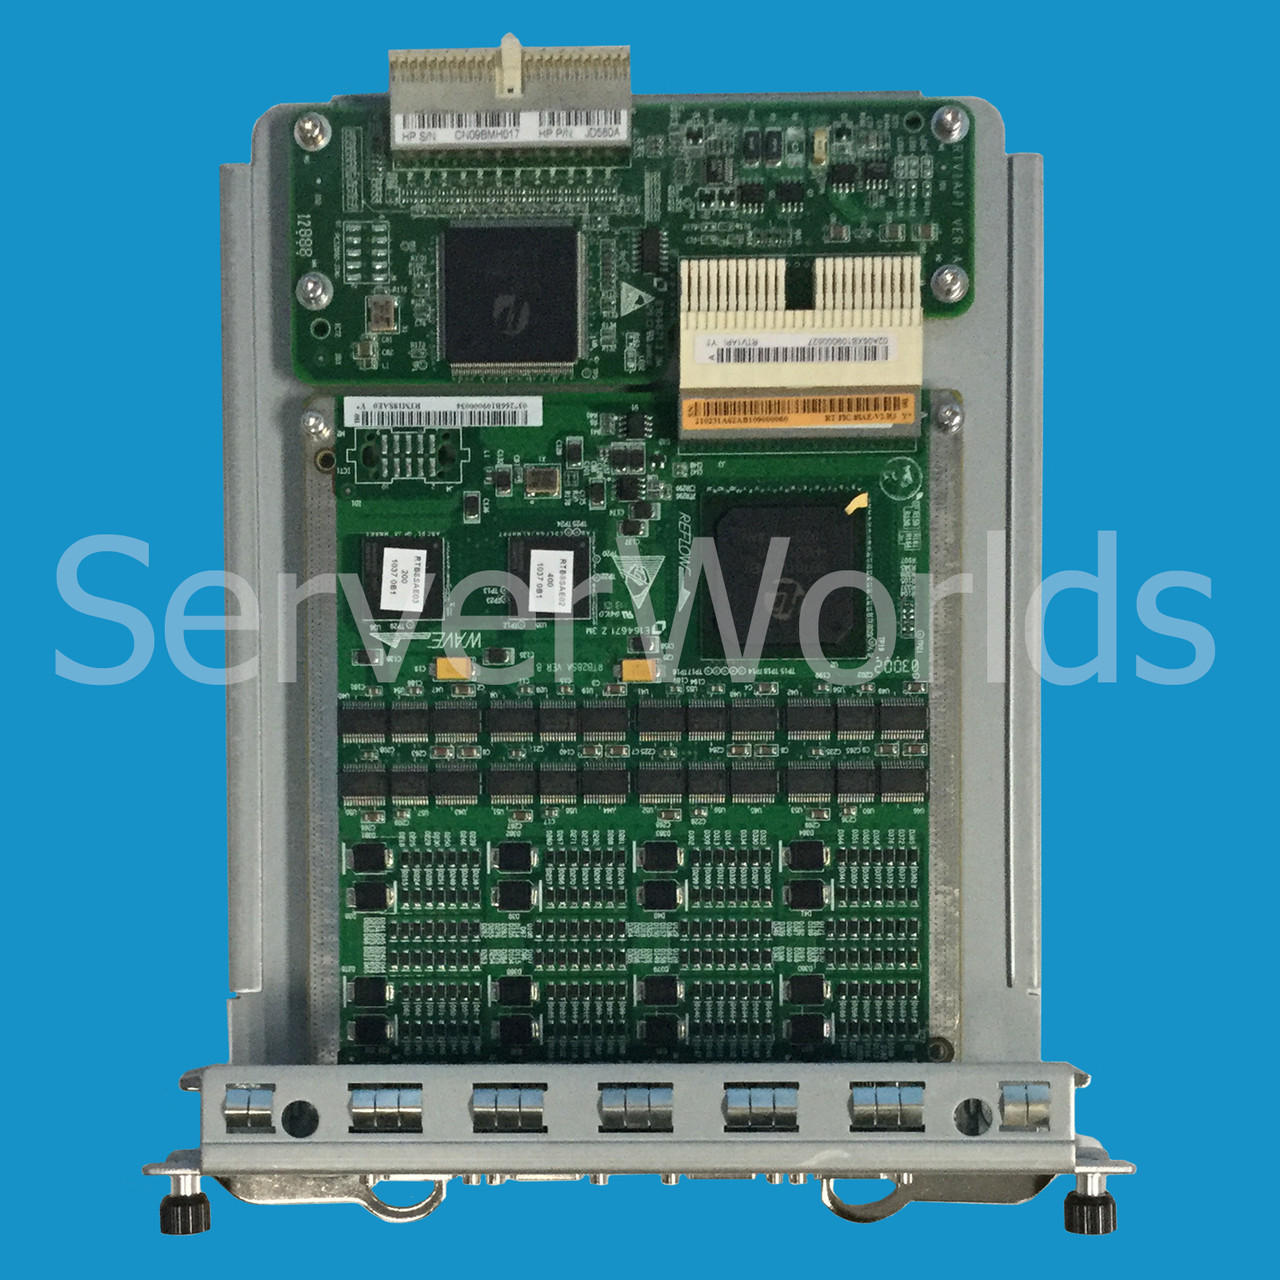 HP JD580A MSR 8-port Serial FIC module